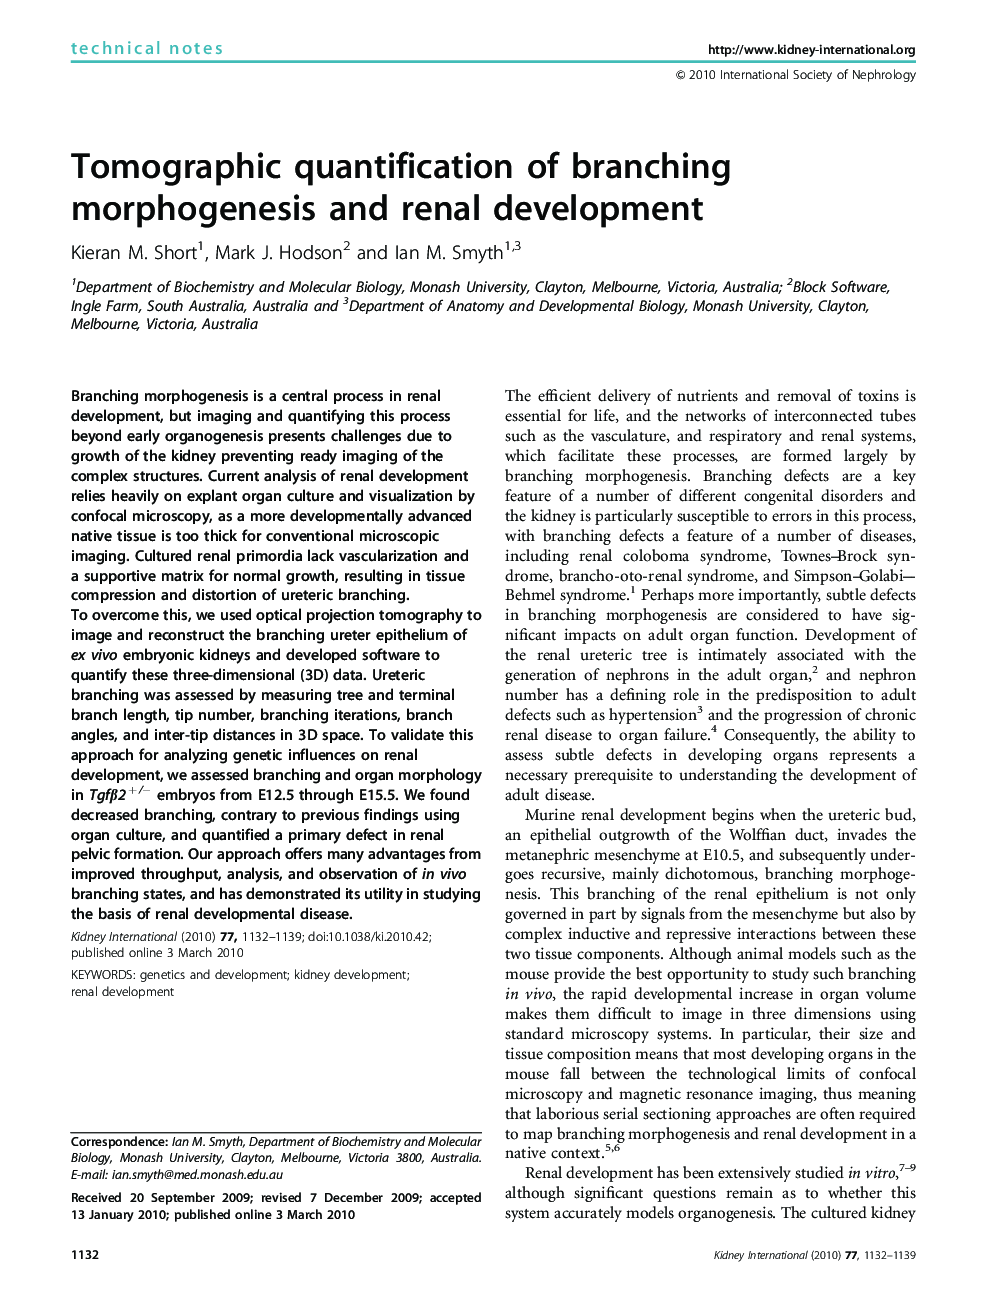 Tomographic quantification of branching morphogenesis and renal development